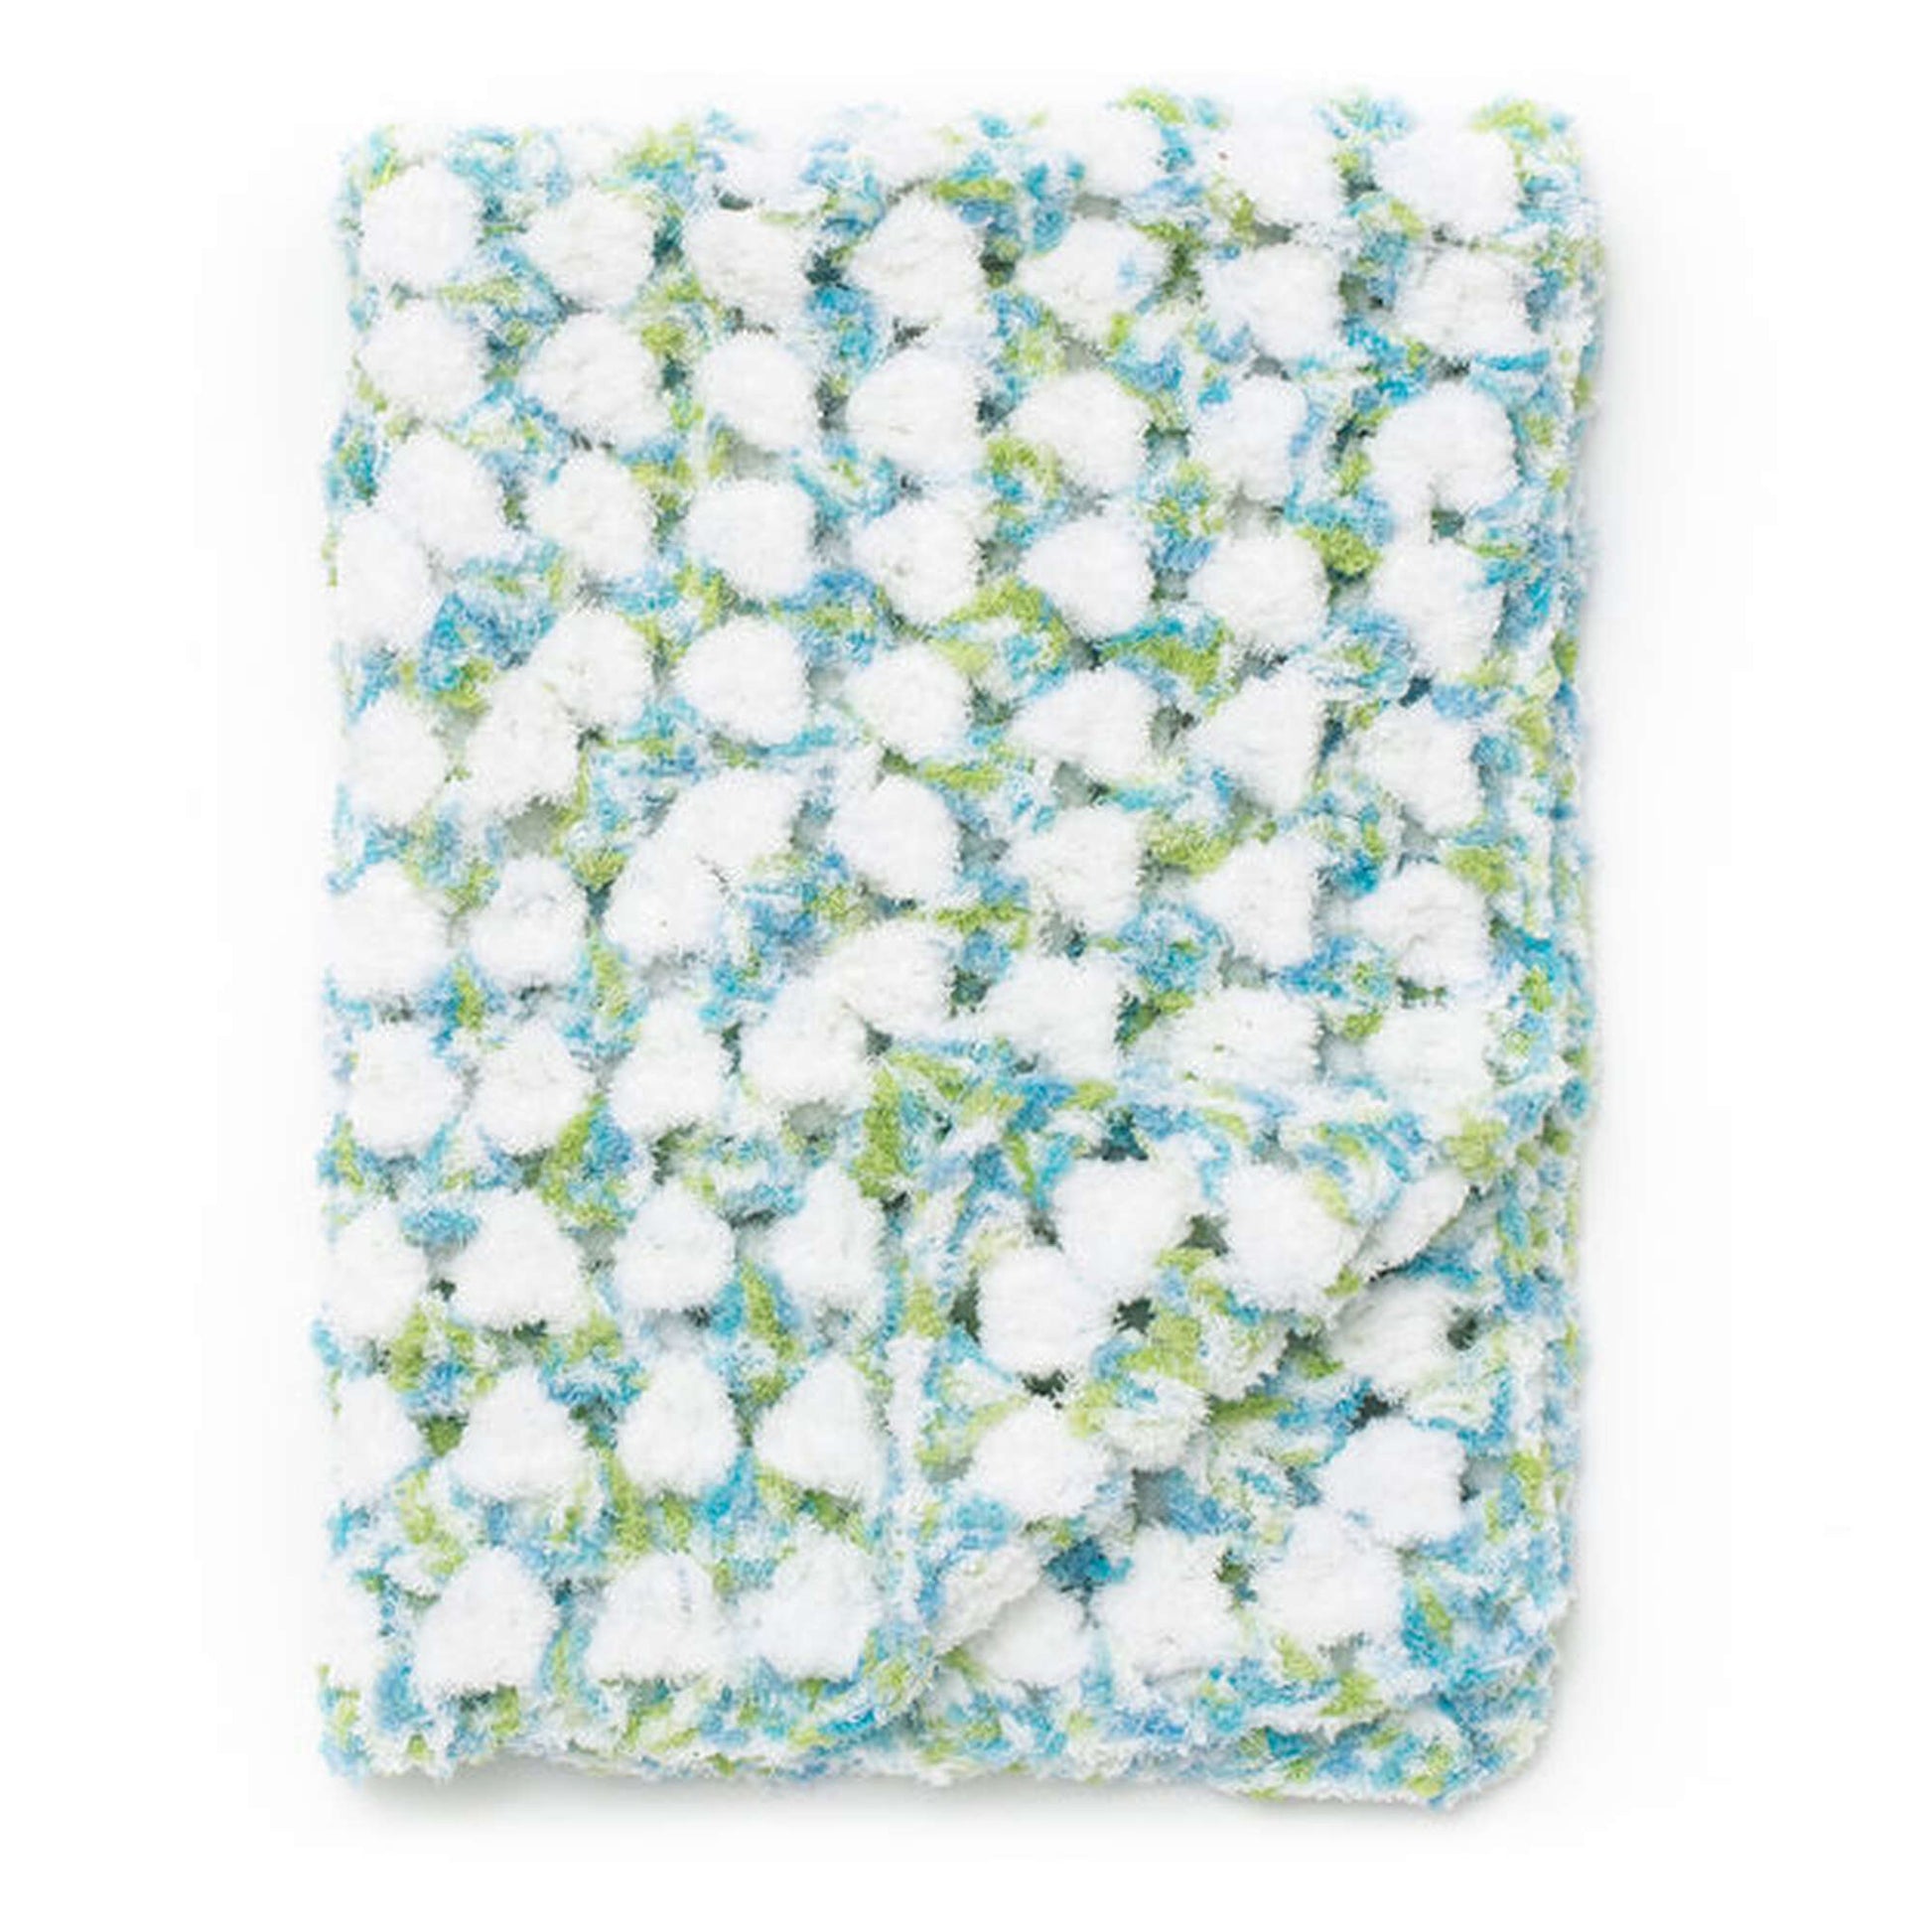 Free Bernat Bias Blocks Crochet Baby Blanket Pattern